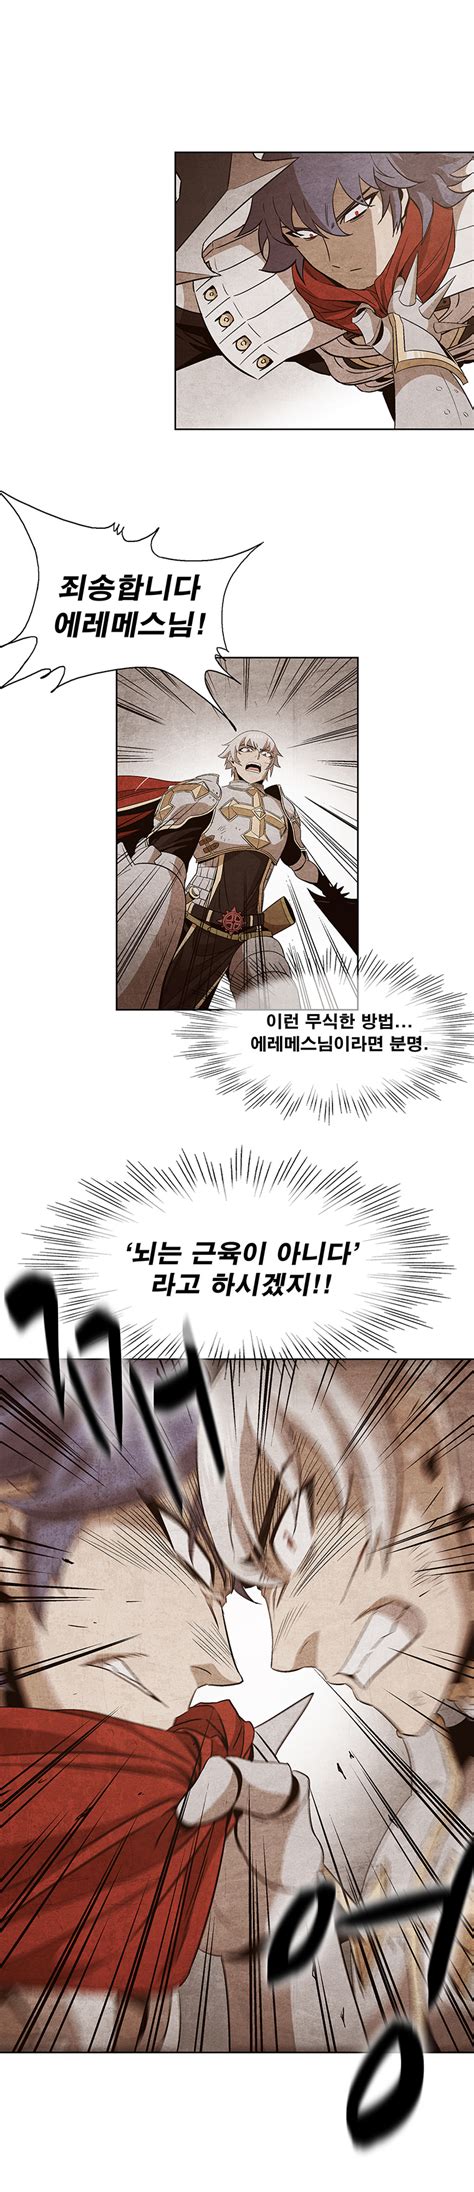 Assassin Cross And Eremes Guile Ragnarok Online Drawn By Seo Jaiil